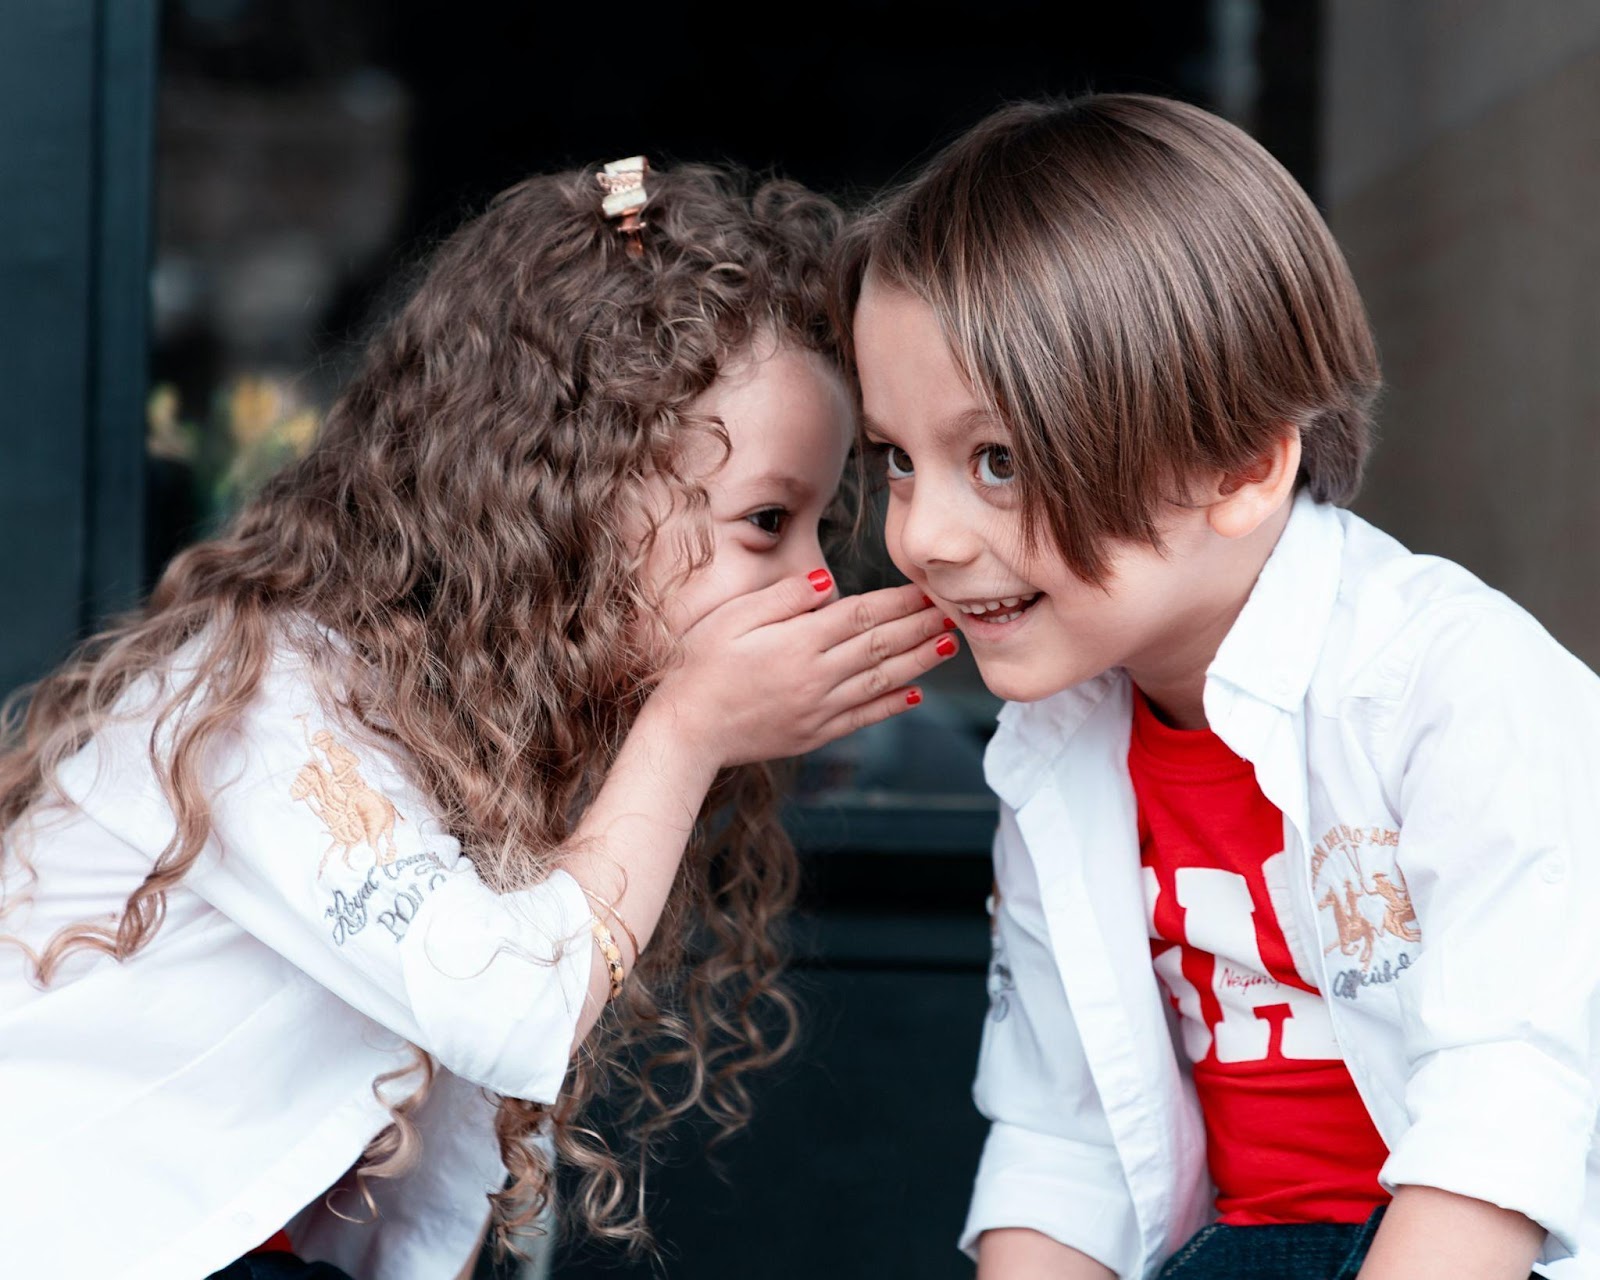 Kids whispering a secret